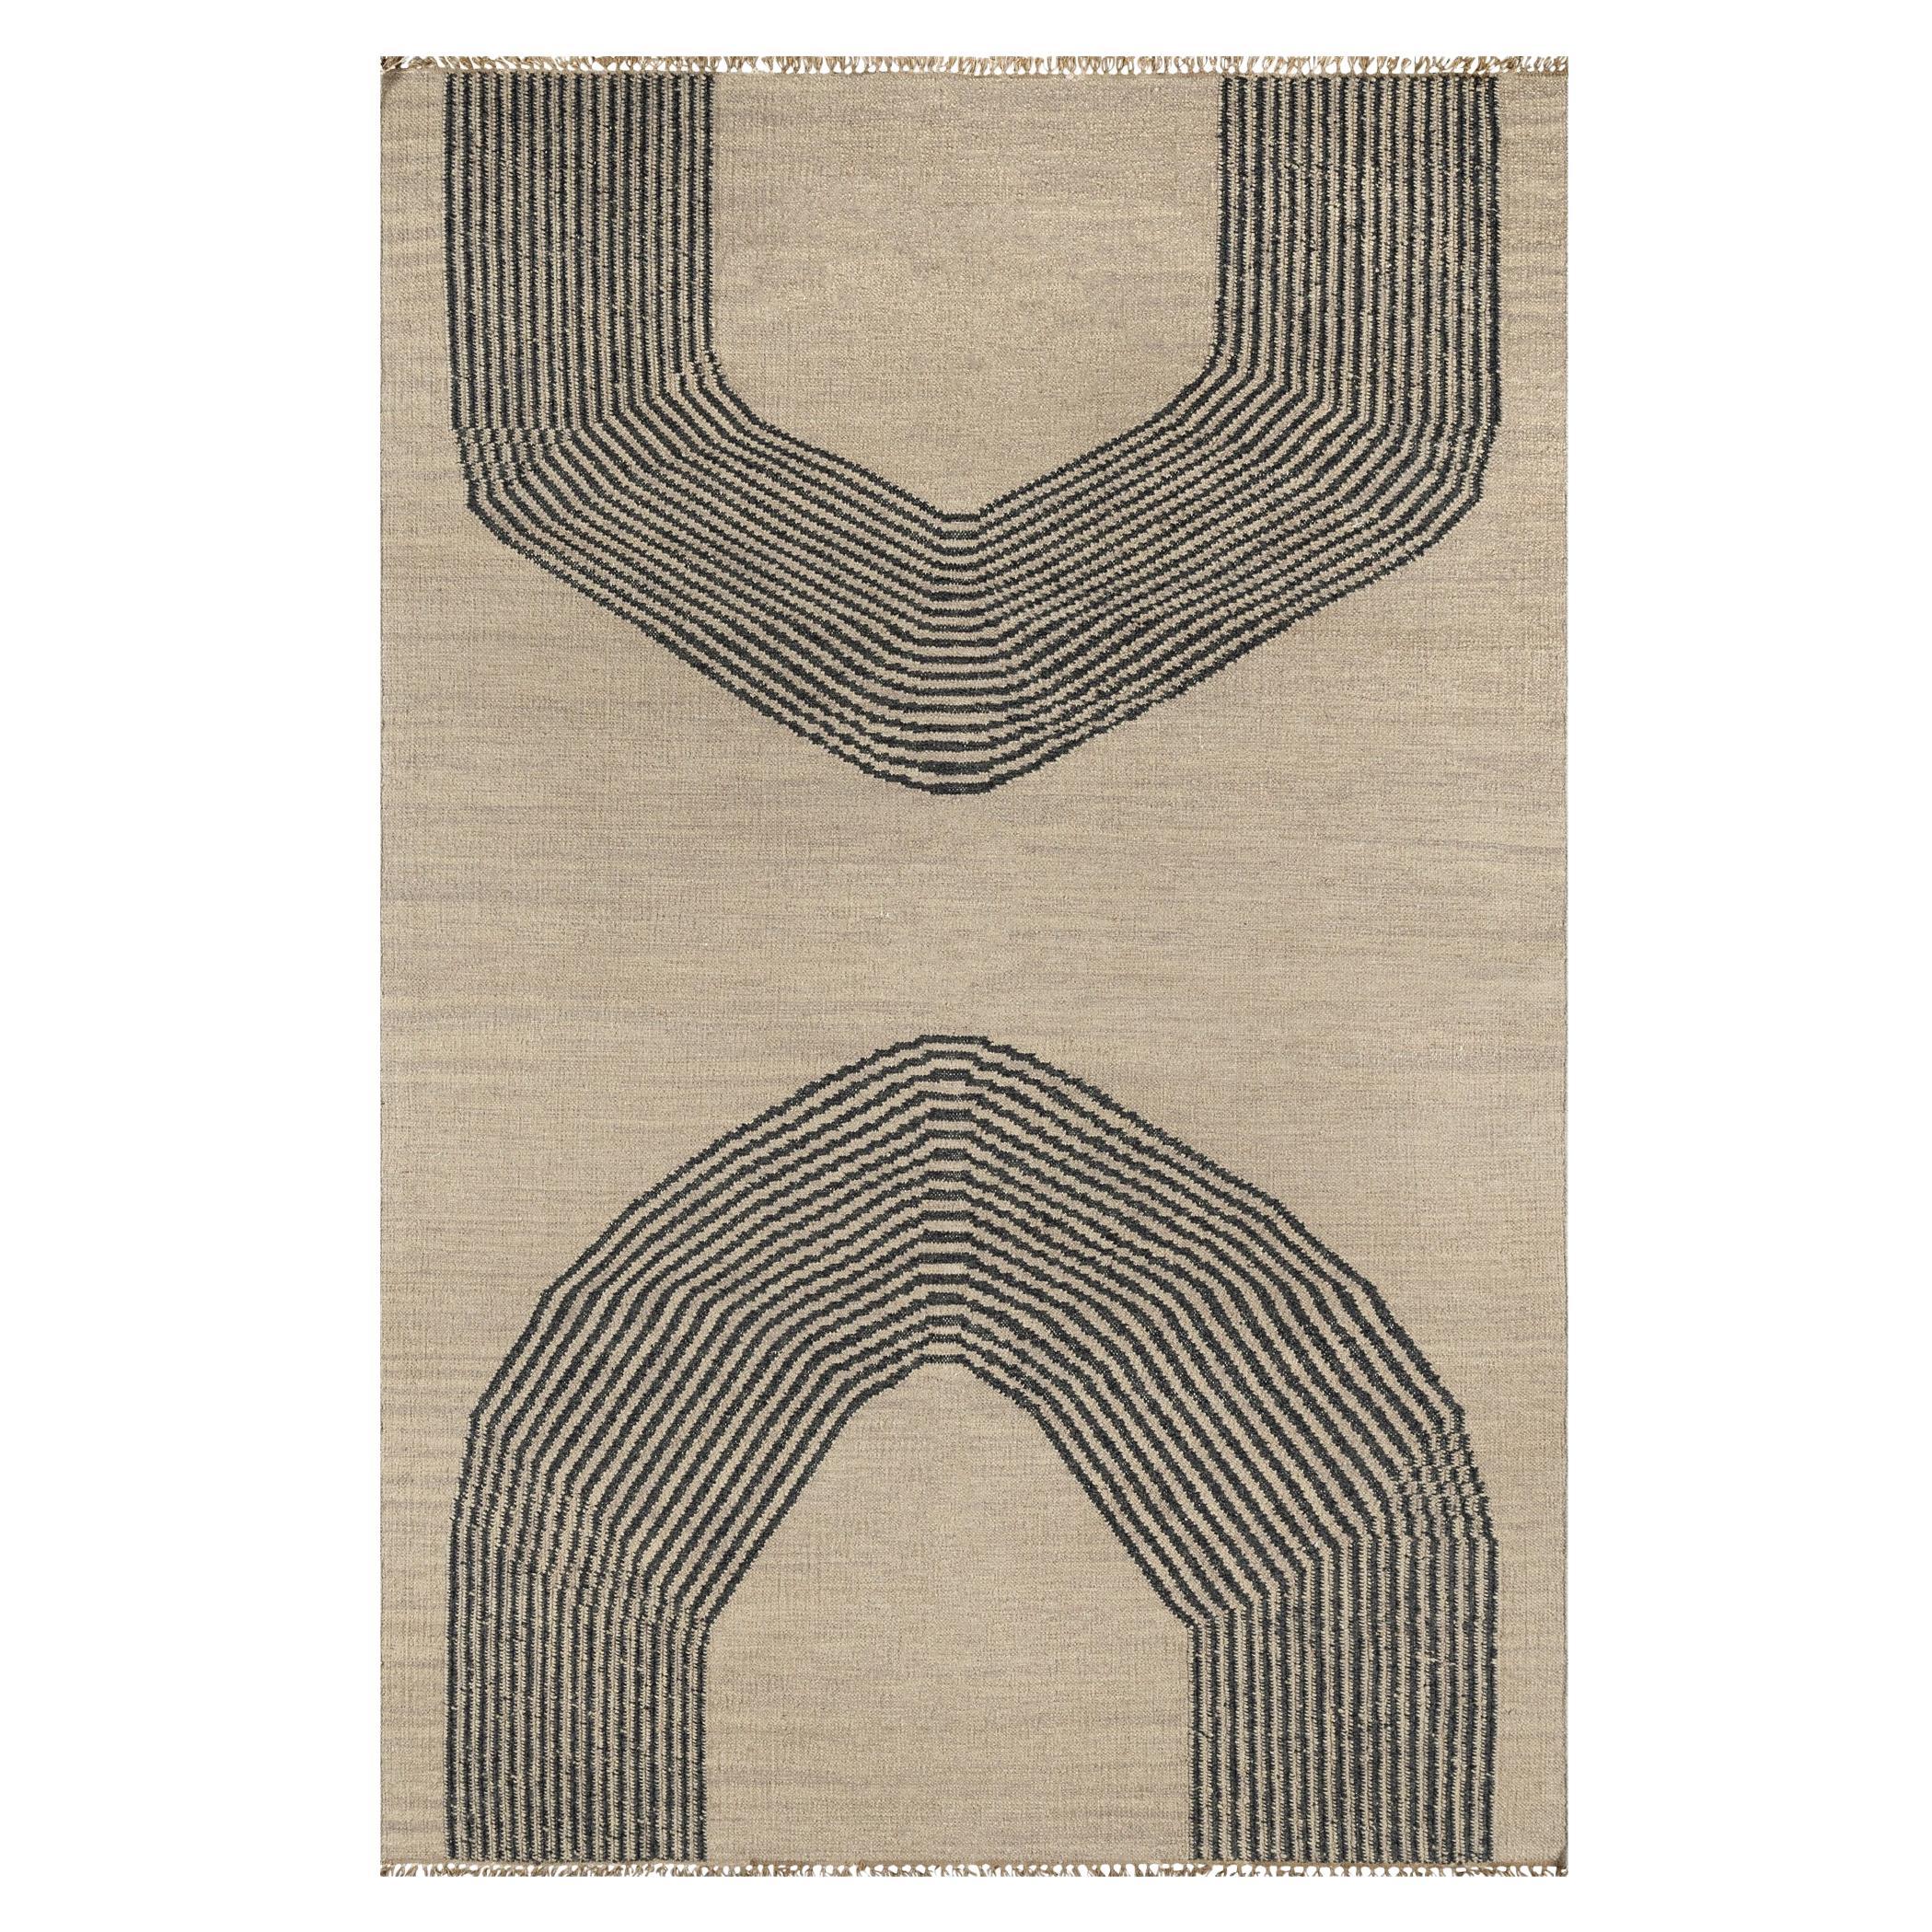 “Metlili Tukar” Bespoke, Handwoven Wool Rug by Christiane Lemieux